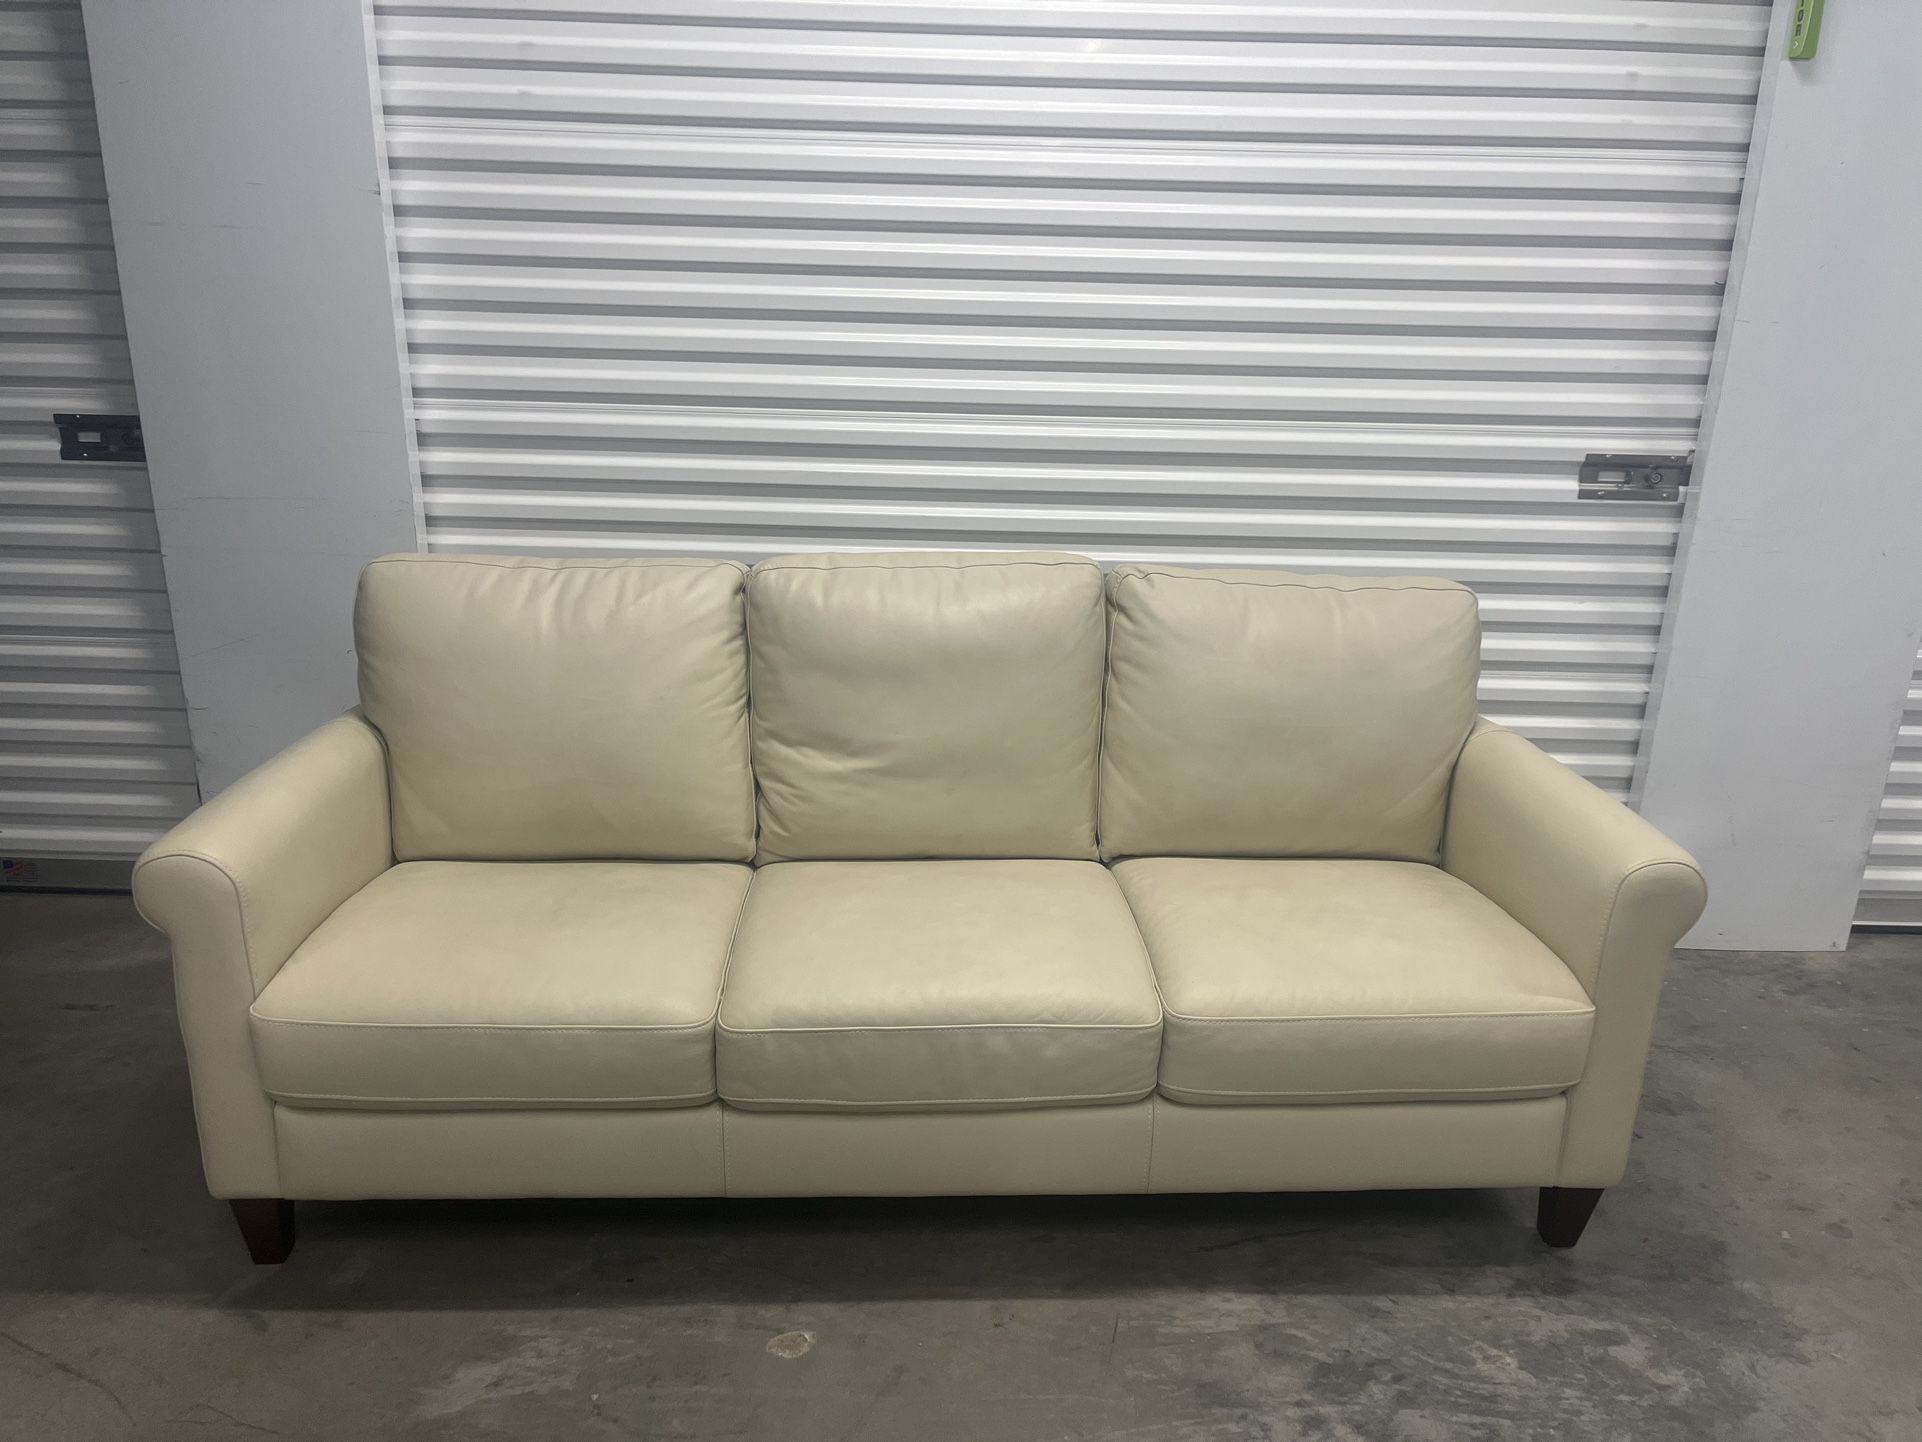 Macys Brand Sofa $350